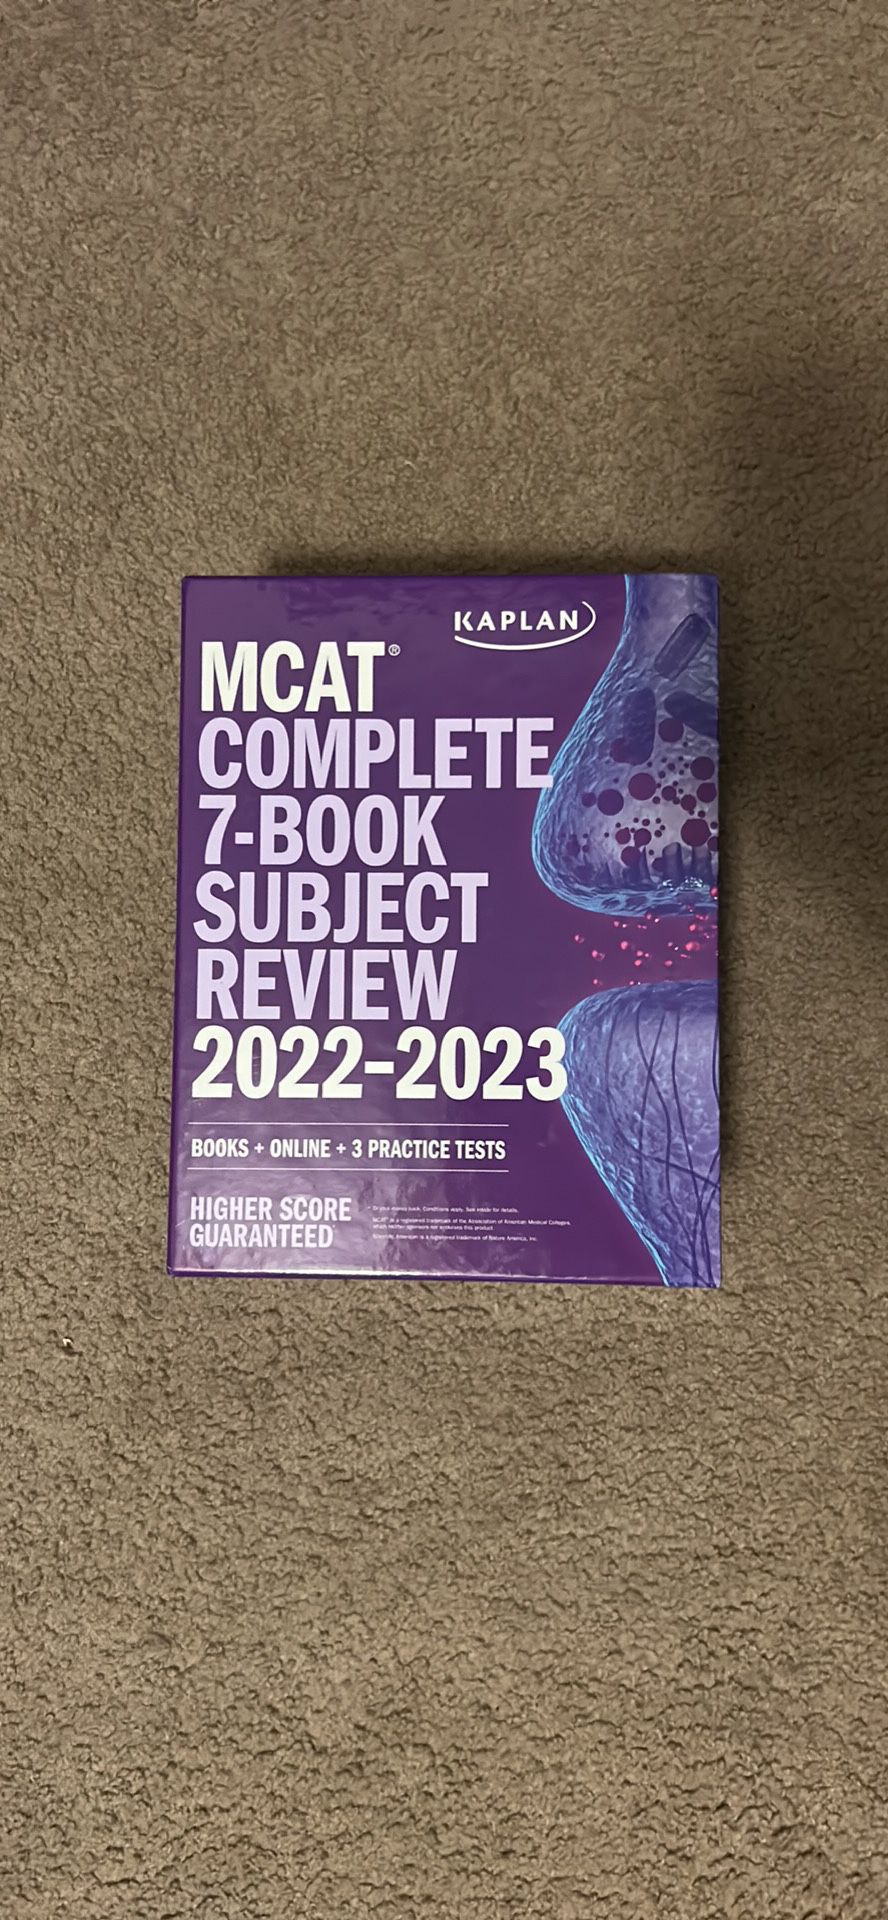 MCAT Complete 7-Book Subject Review 2022-2023 (Kaplan)